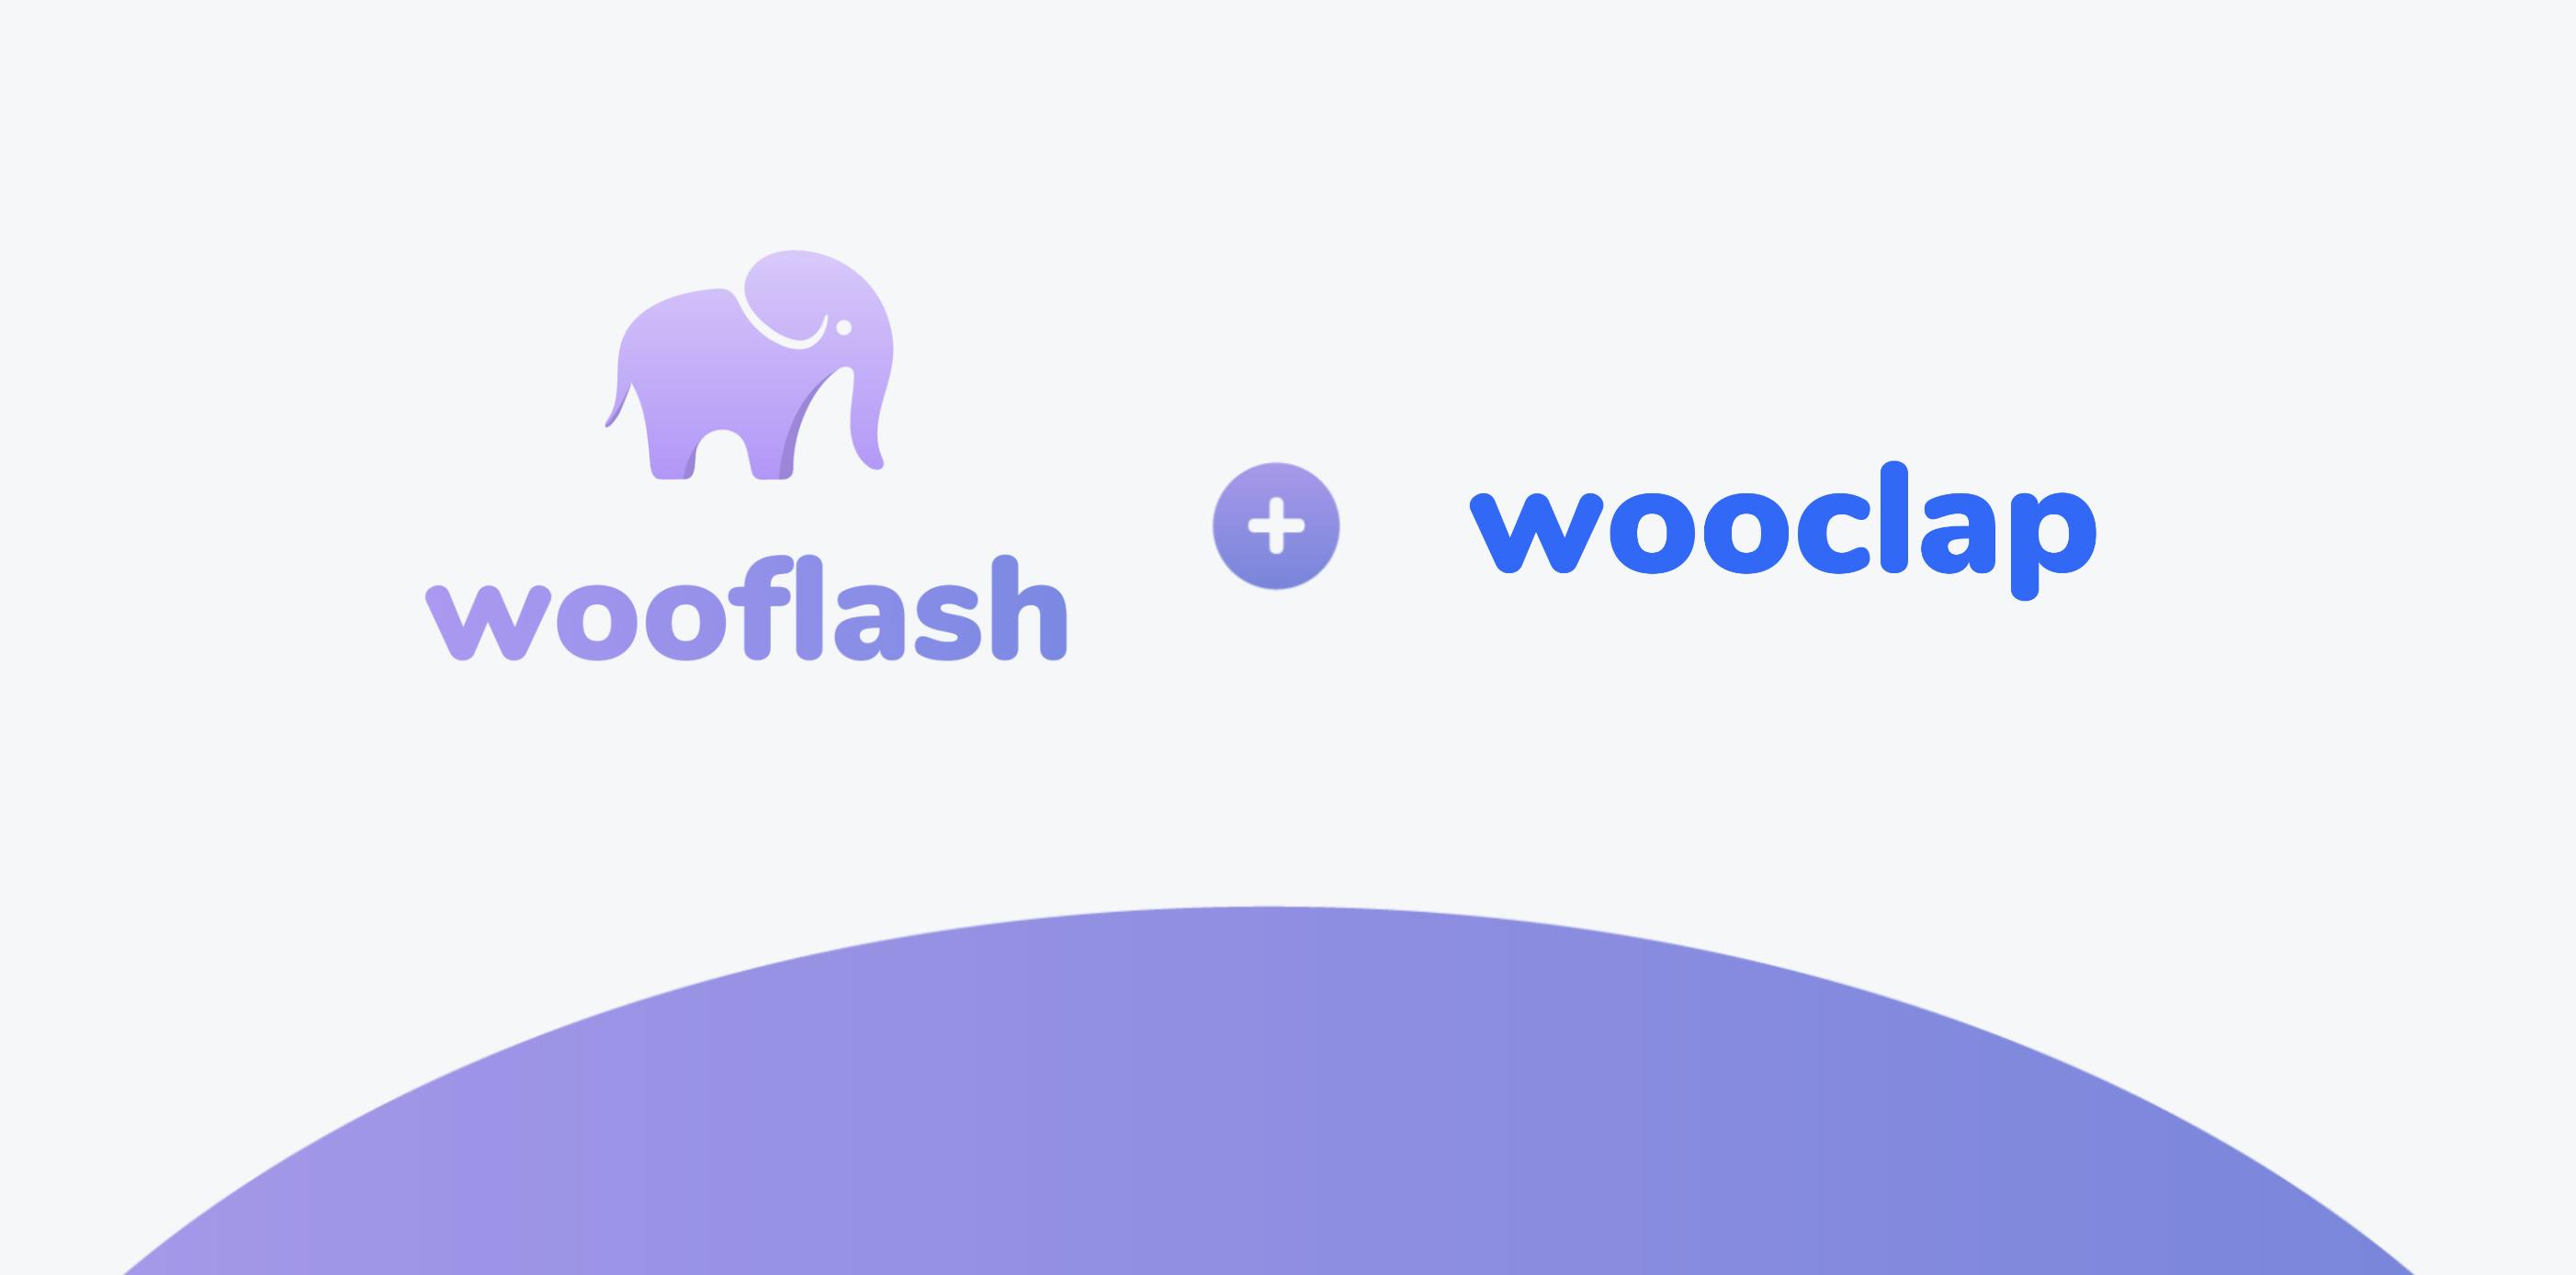 wooclap ou wooflash